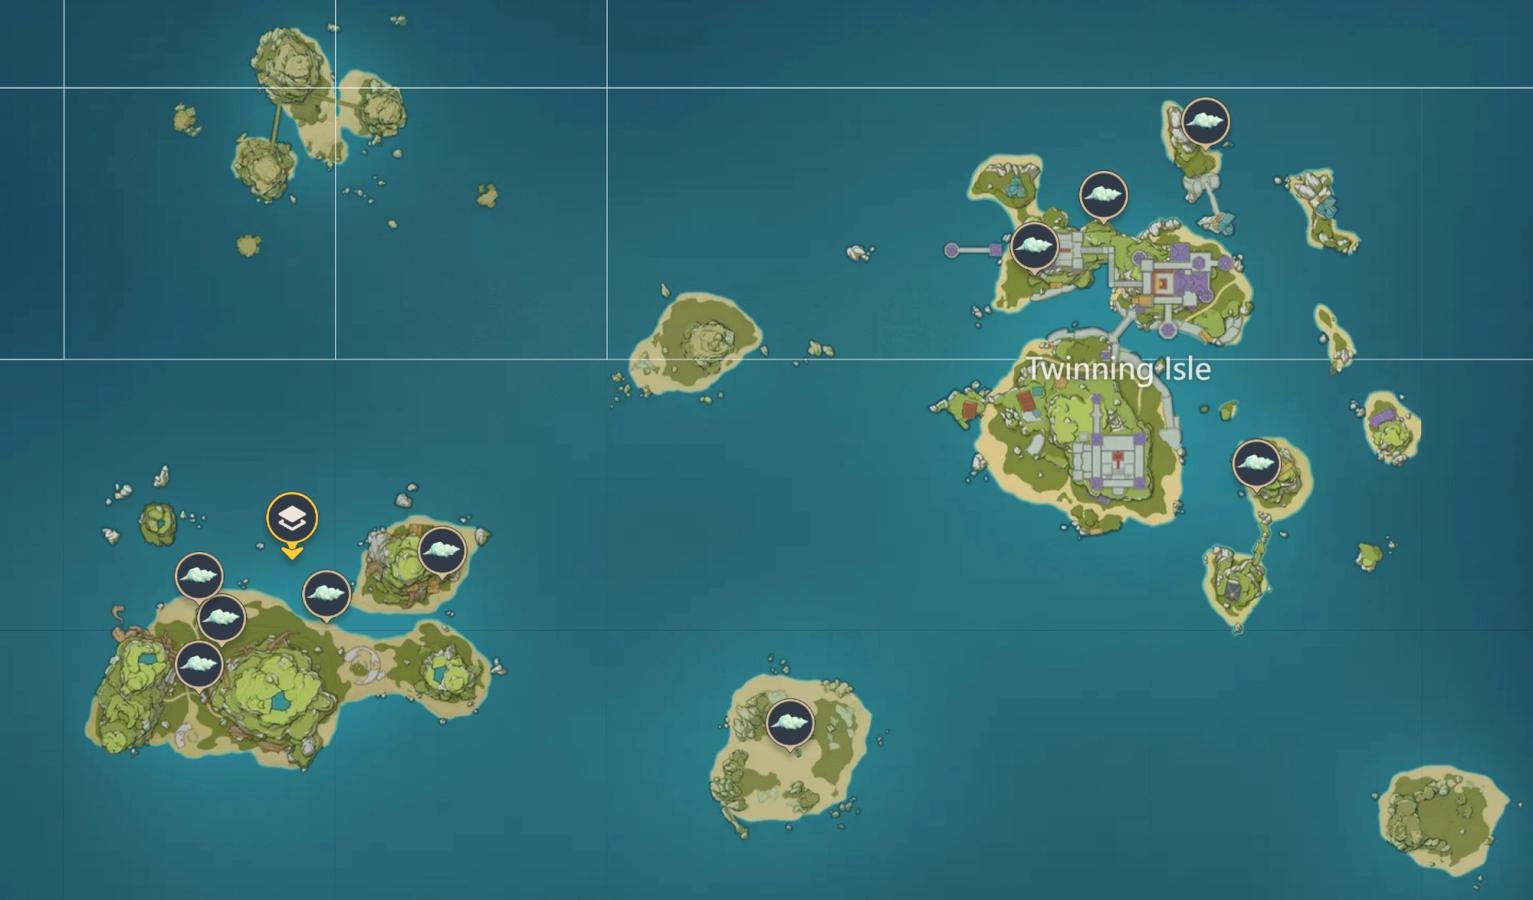 Twinning Isle & Broken Isle Phantasmal Conches Locations in Genshin Impact 2.8